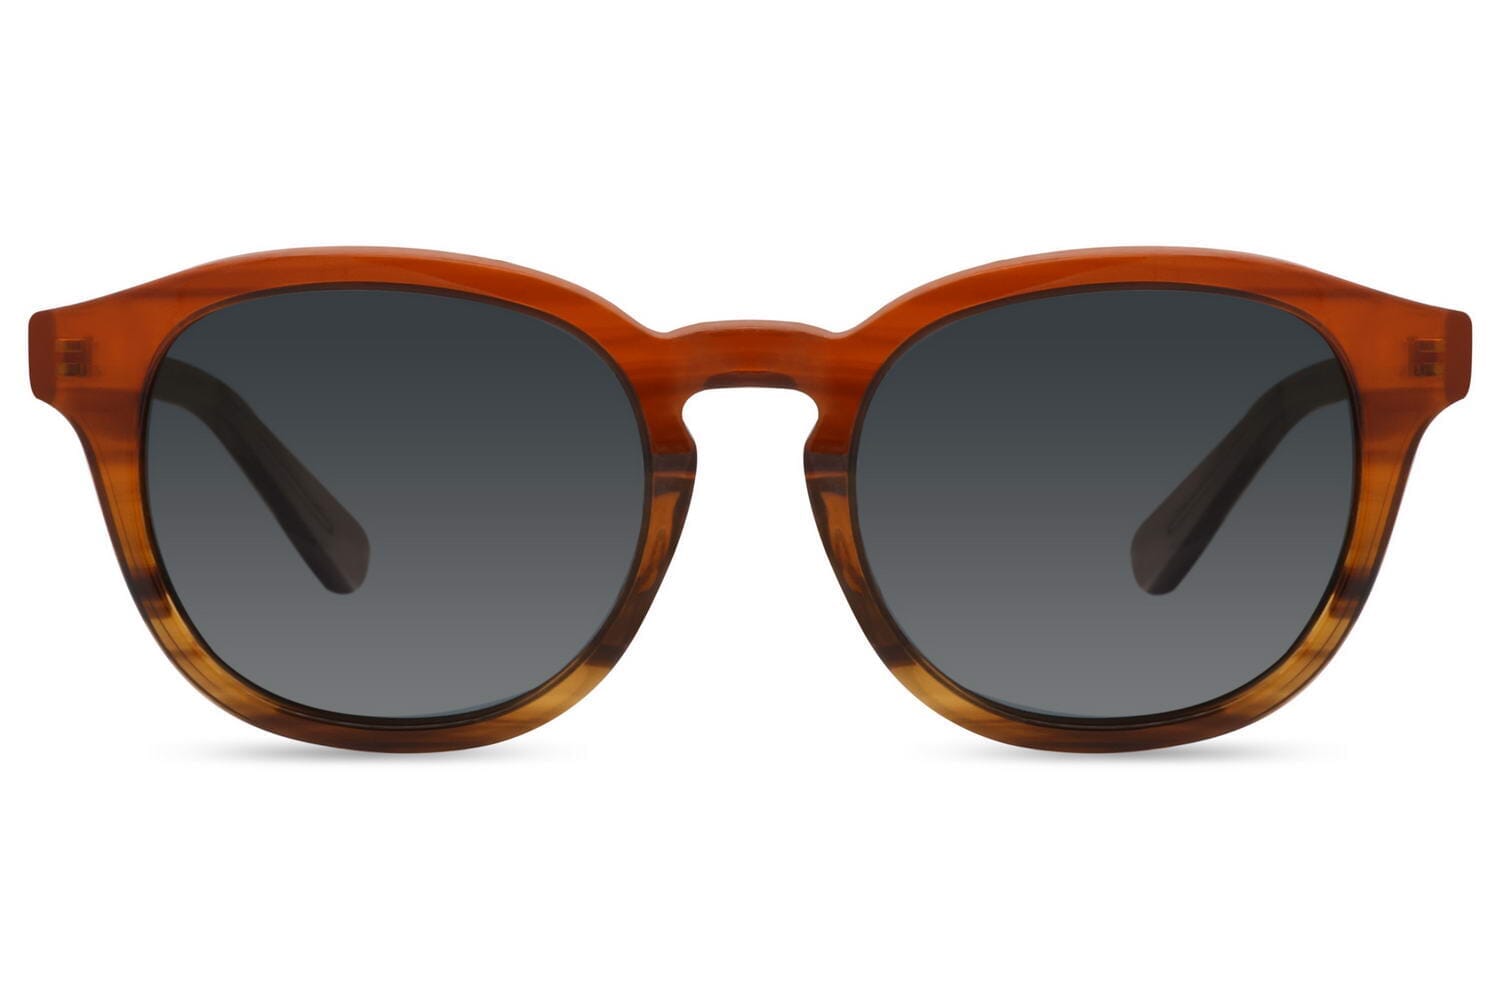 Brown circle sunglasses. Grey lenses. Uv400 protected. Black lenses.